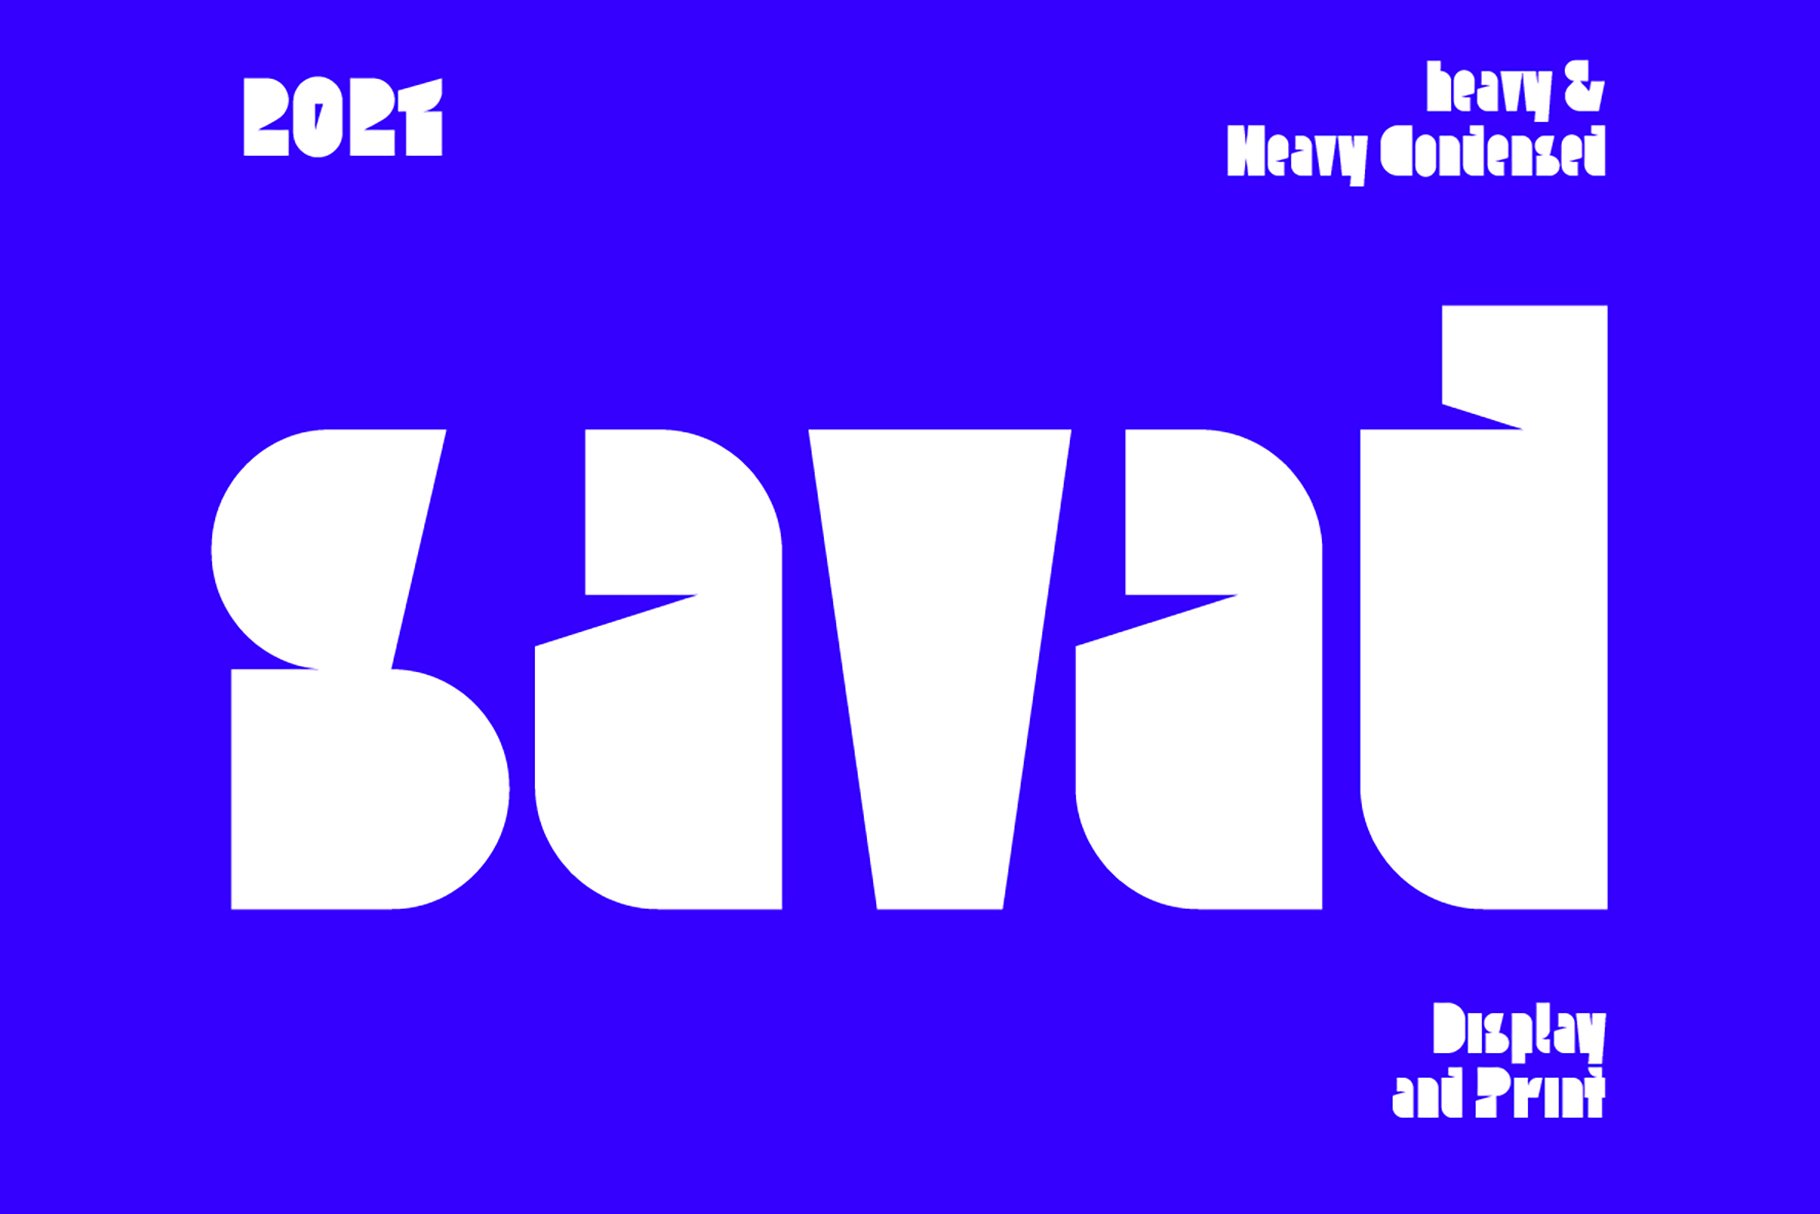 Savad Font cover image.